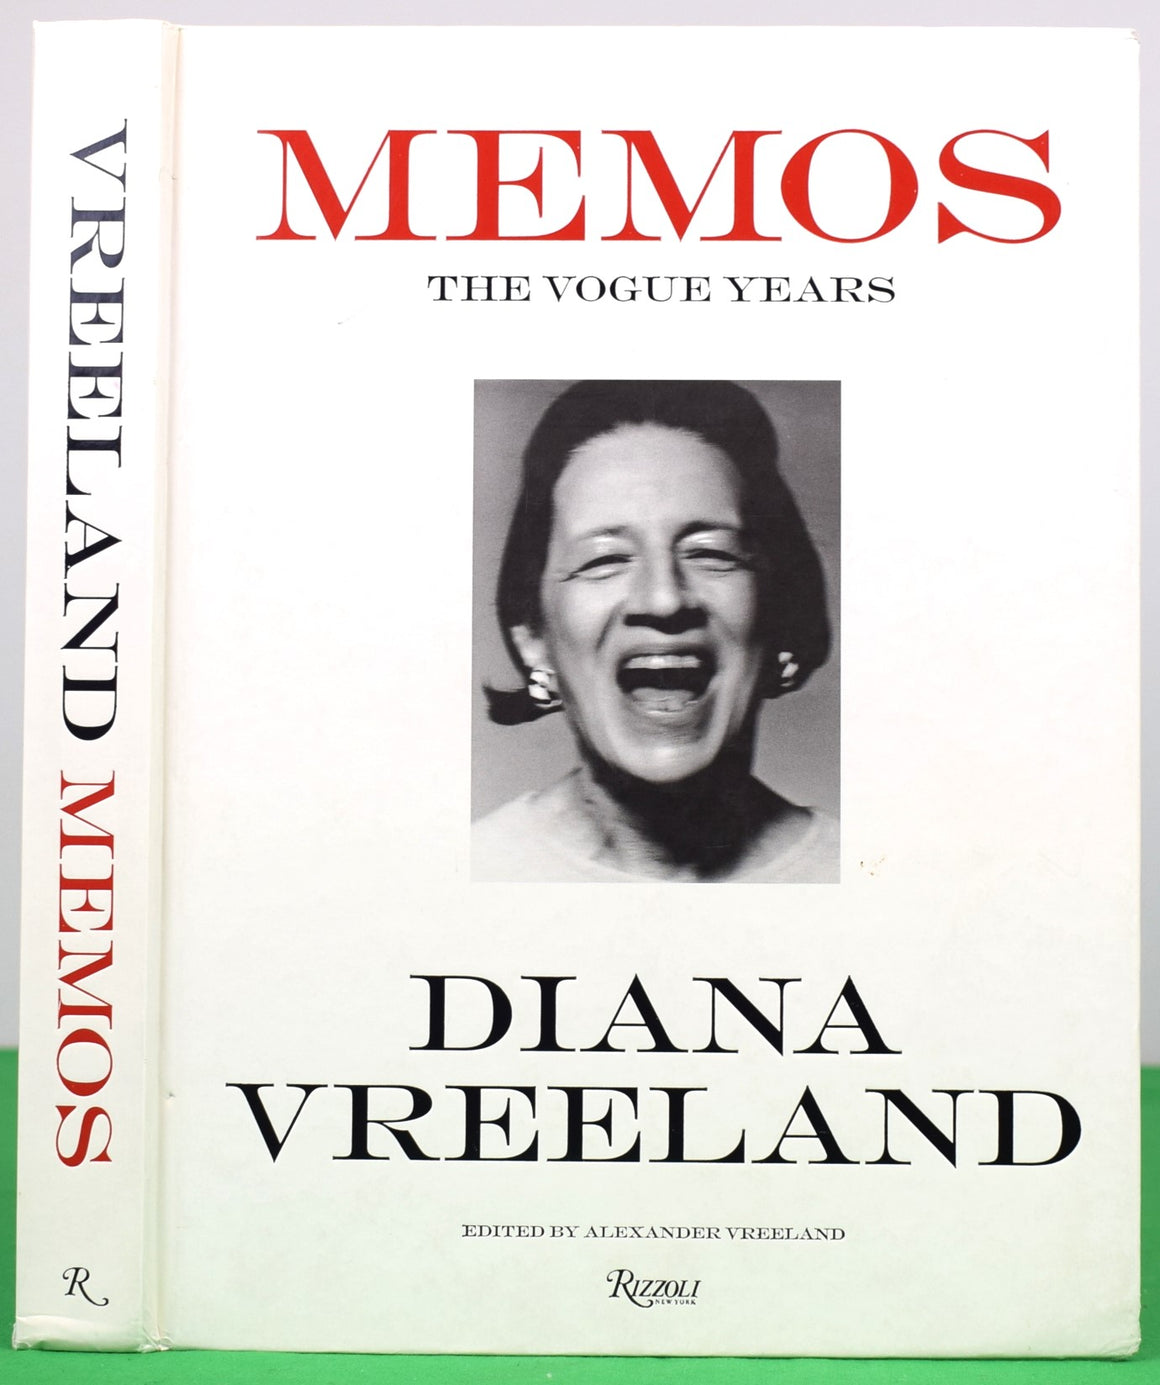 "Diana Vreeland Memos: The Vogue Years 1962-1971" 2013 VREELAND, Alexander [edited by]